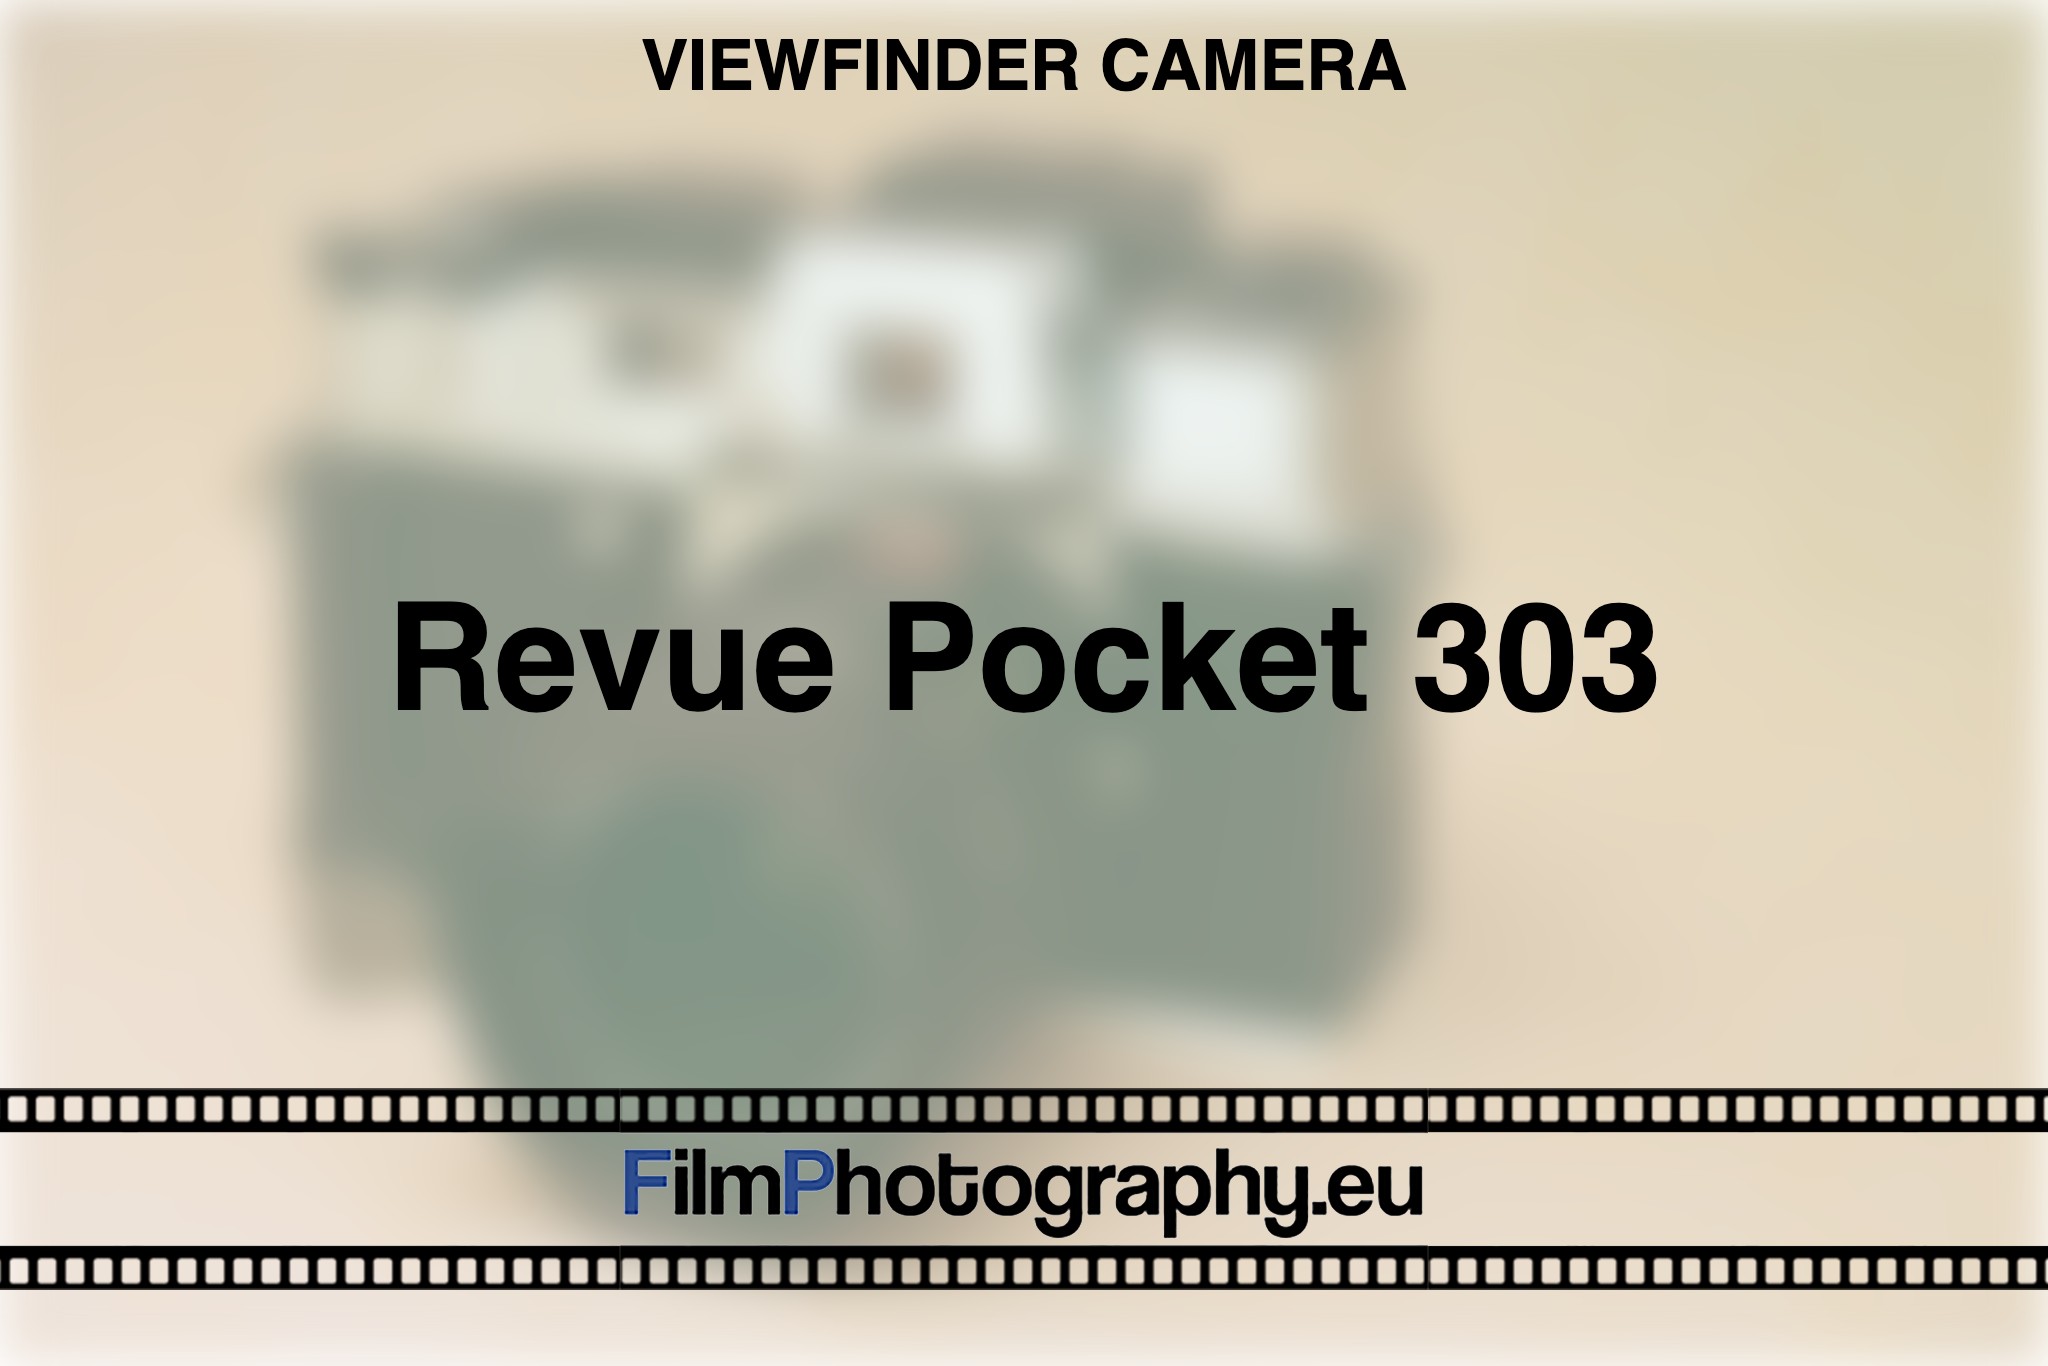 revue-pocket-303-viewfinder-camera-bnv